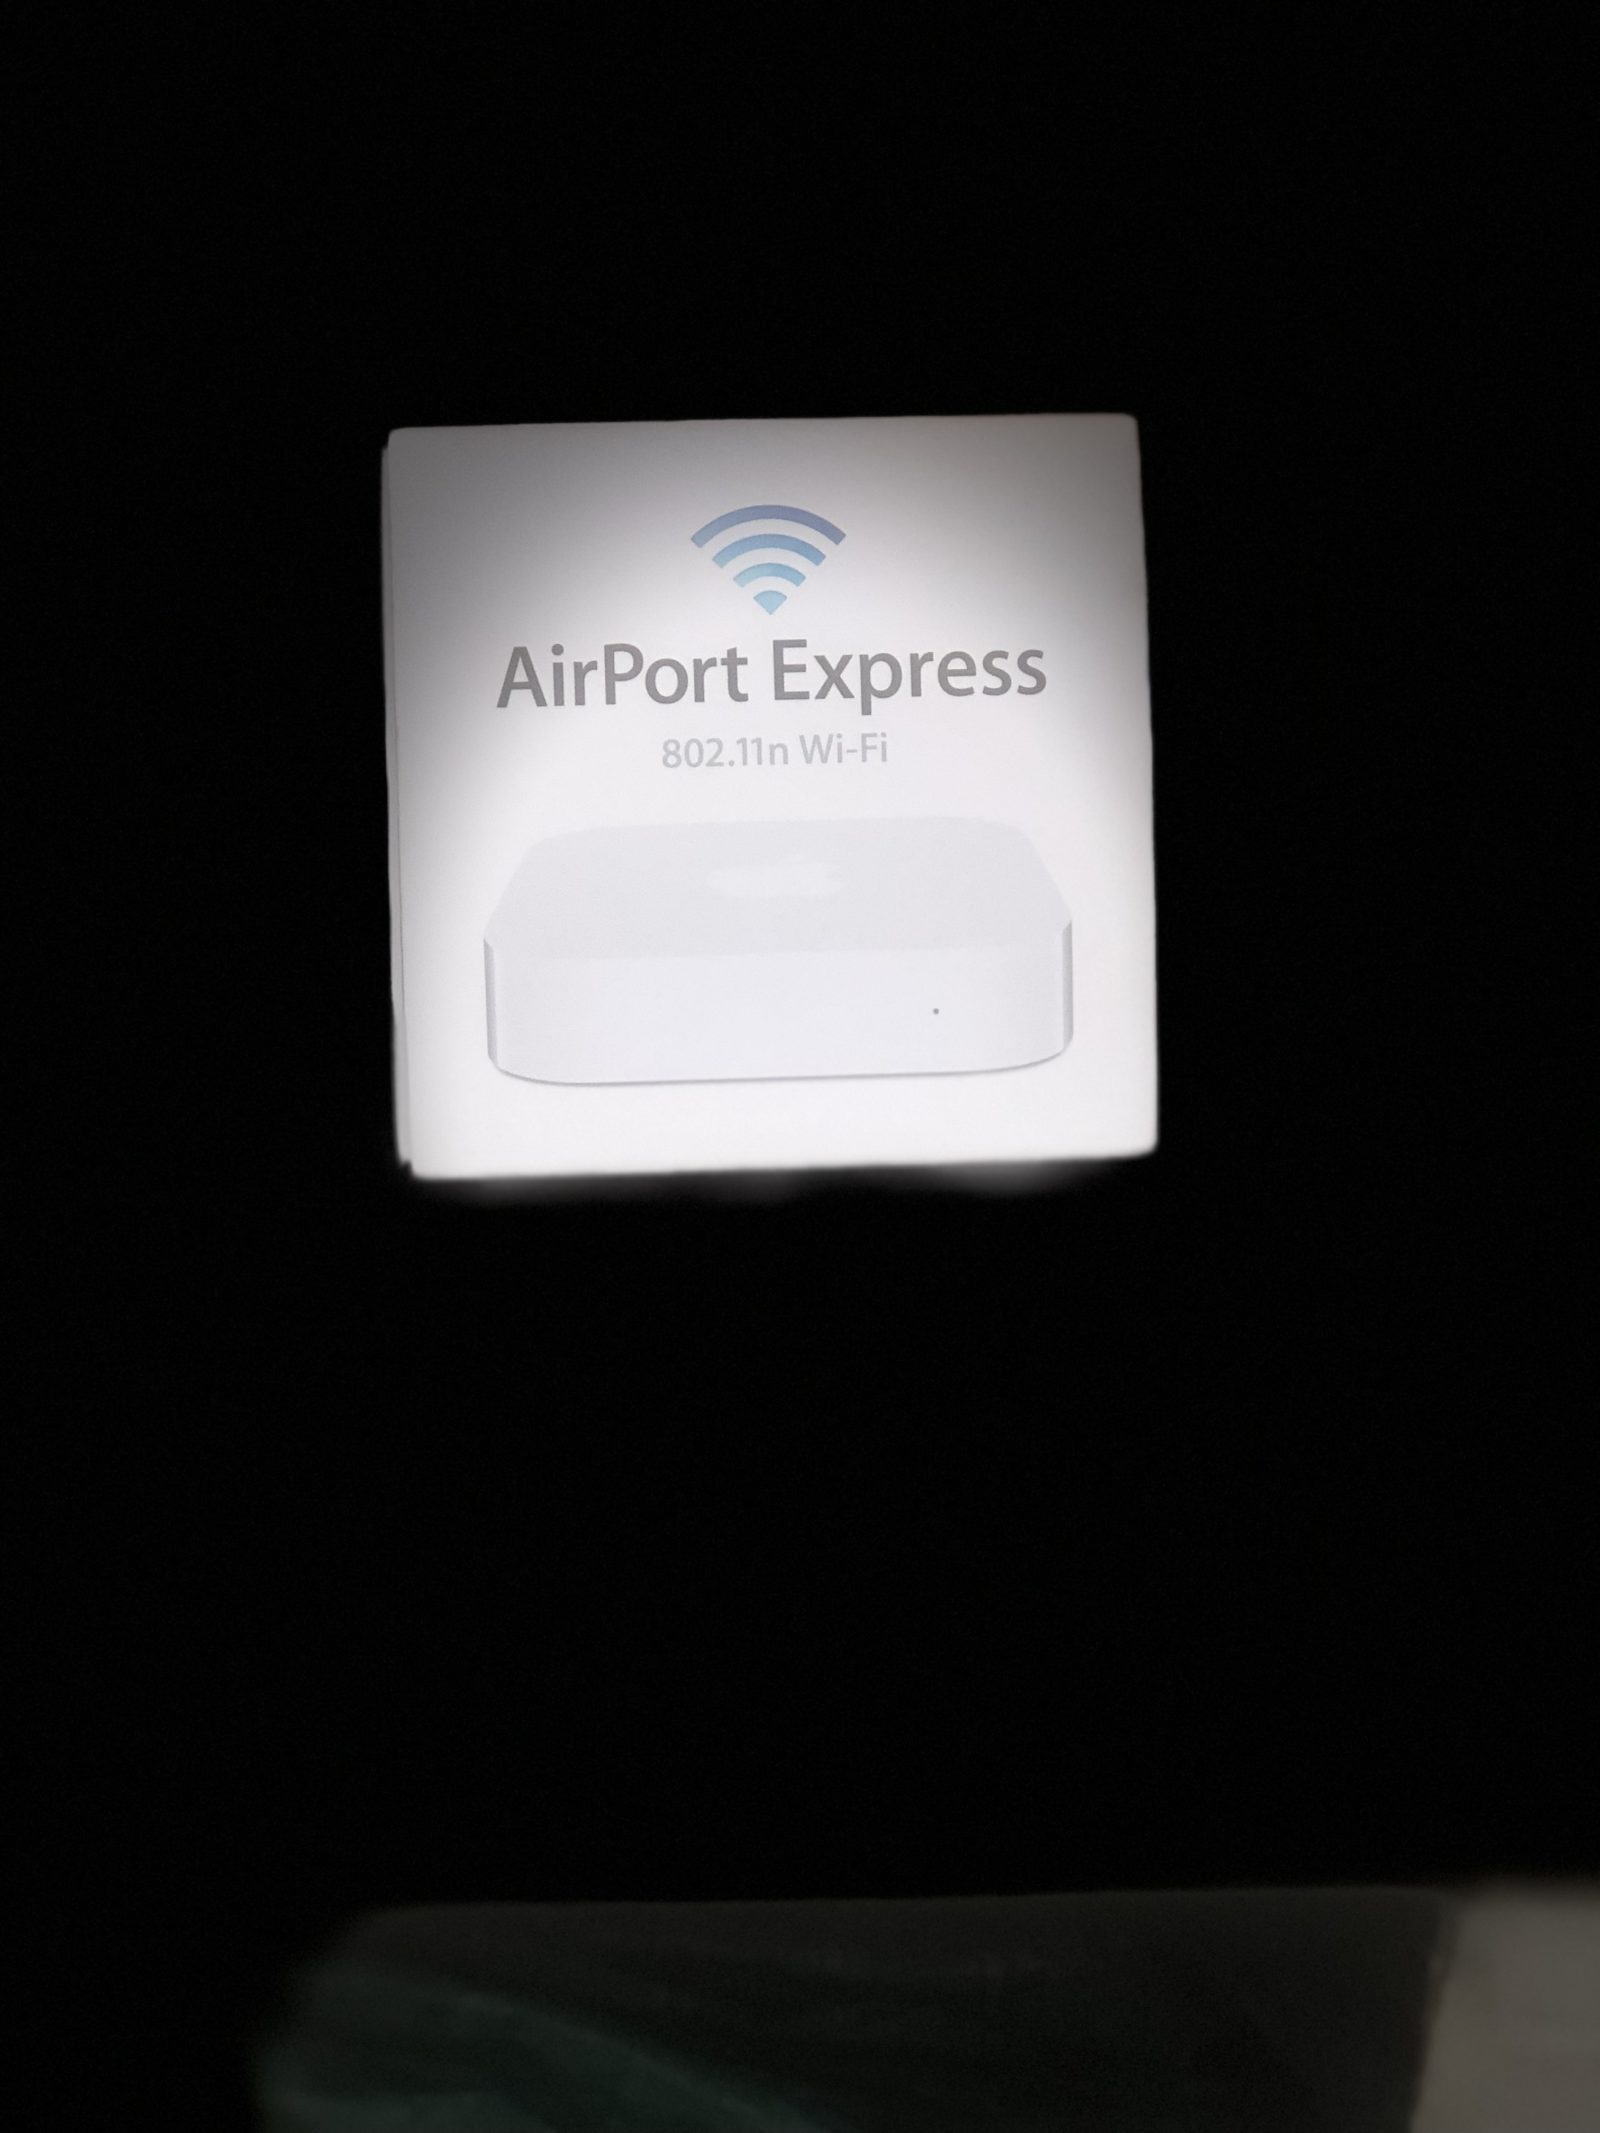 Airport Express